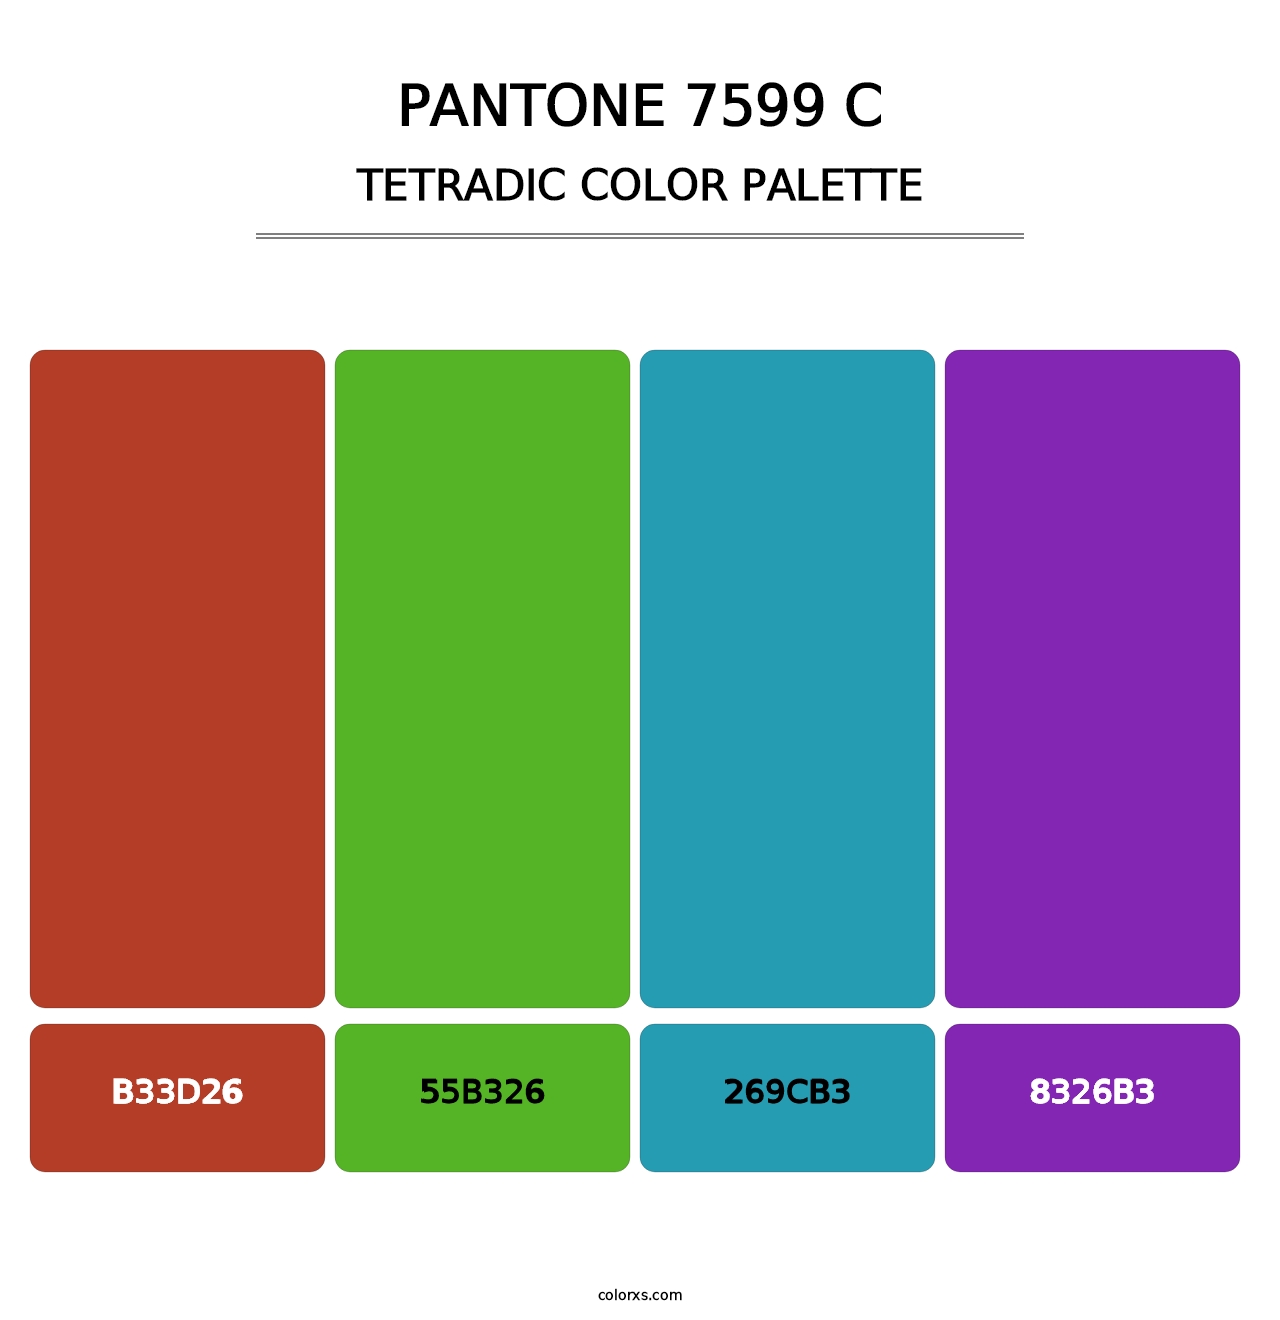 PANTONE 7599 C - Tetradic Color Palette